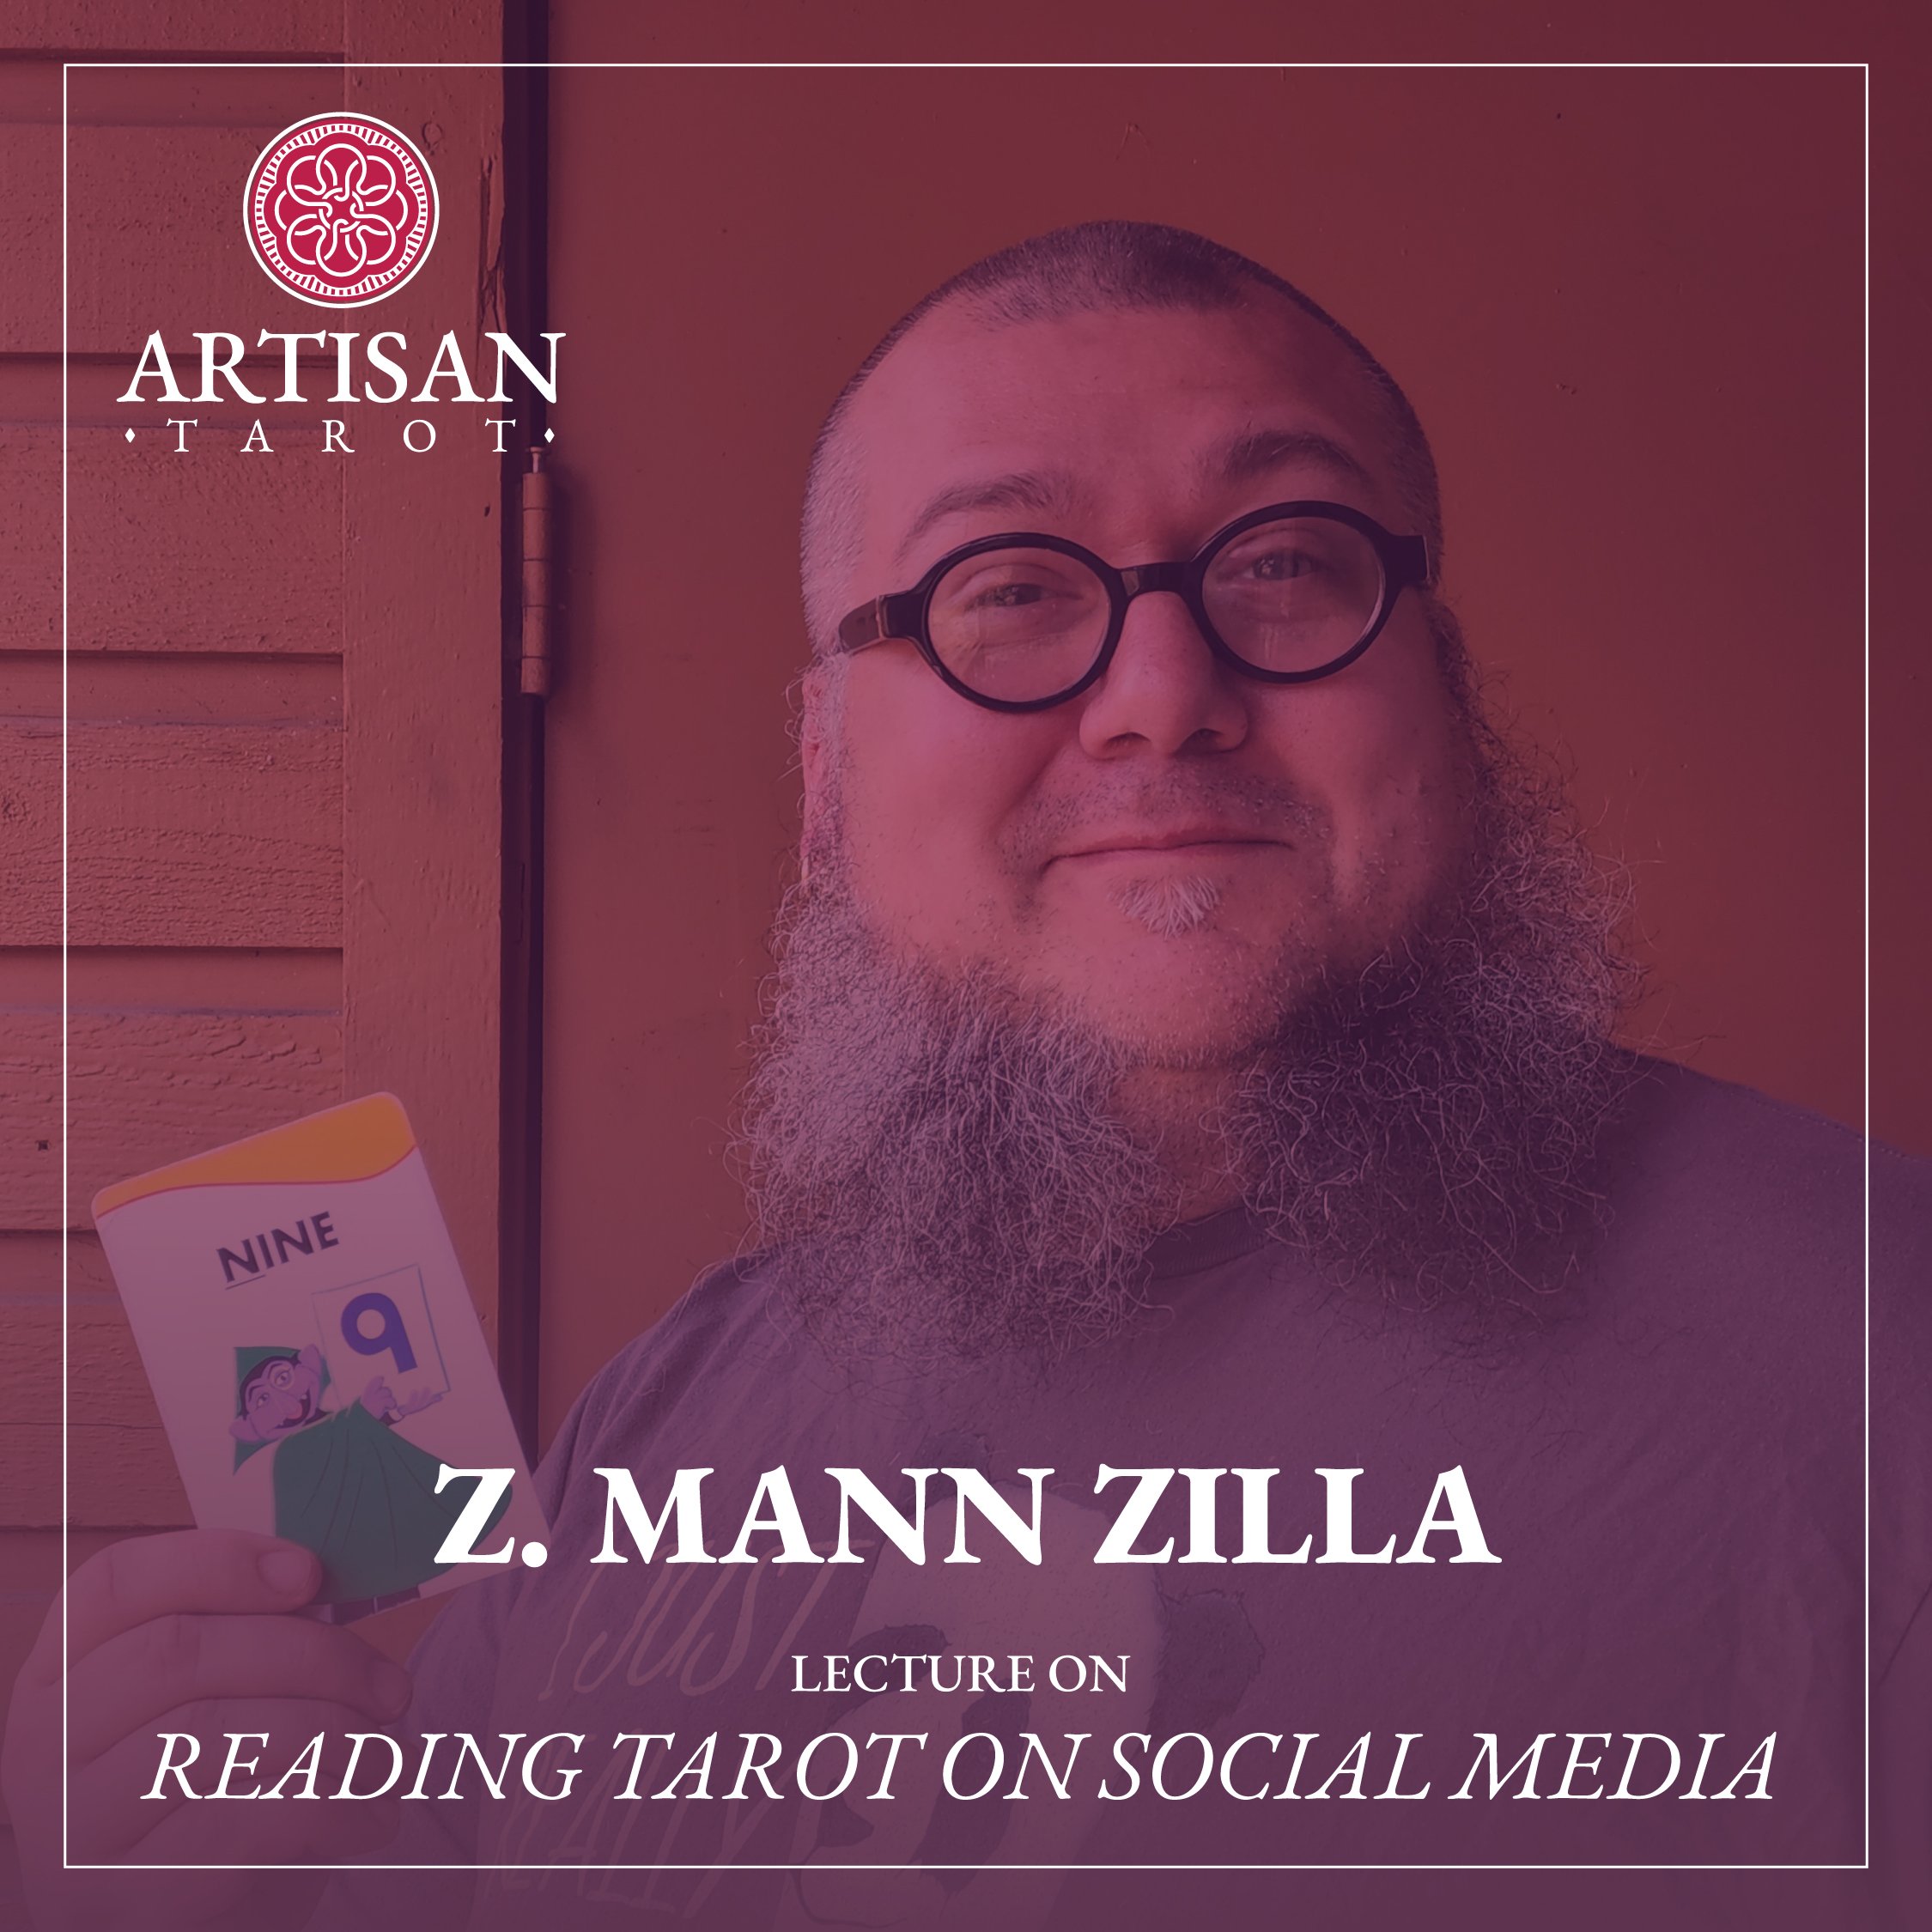 Z. Mann Zilla - Lecture on Reading Tarot on Social Media